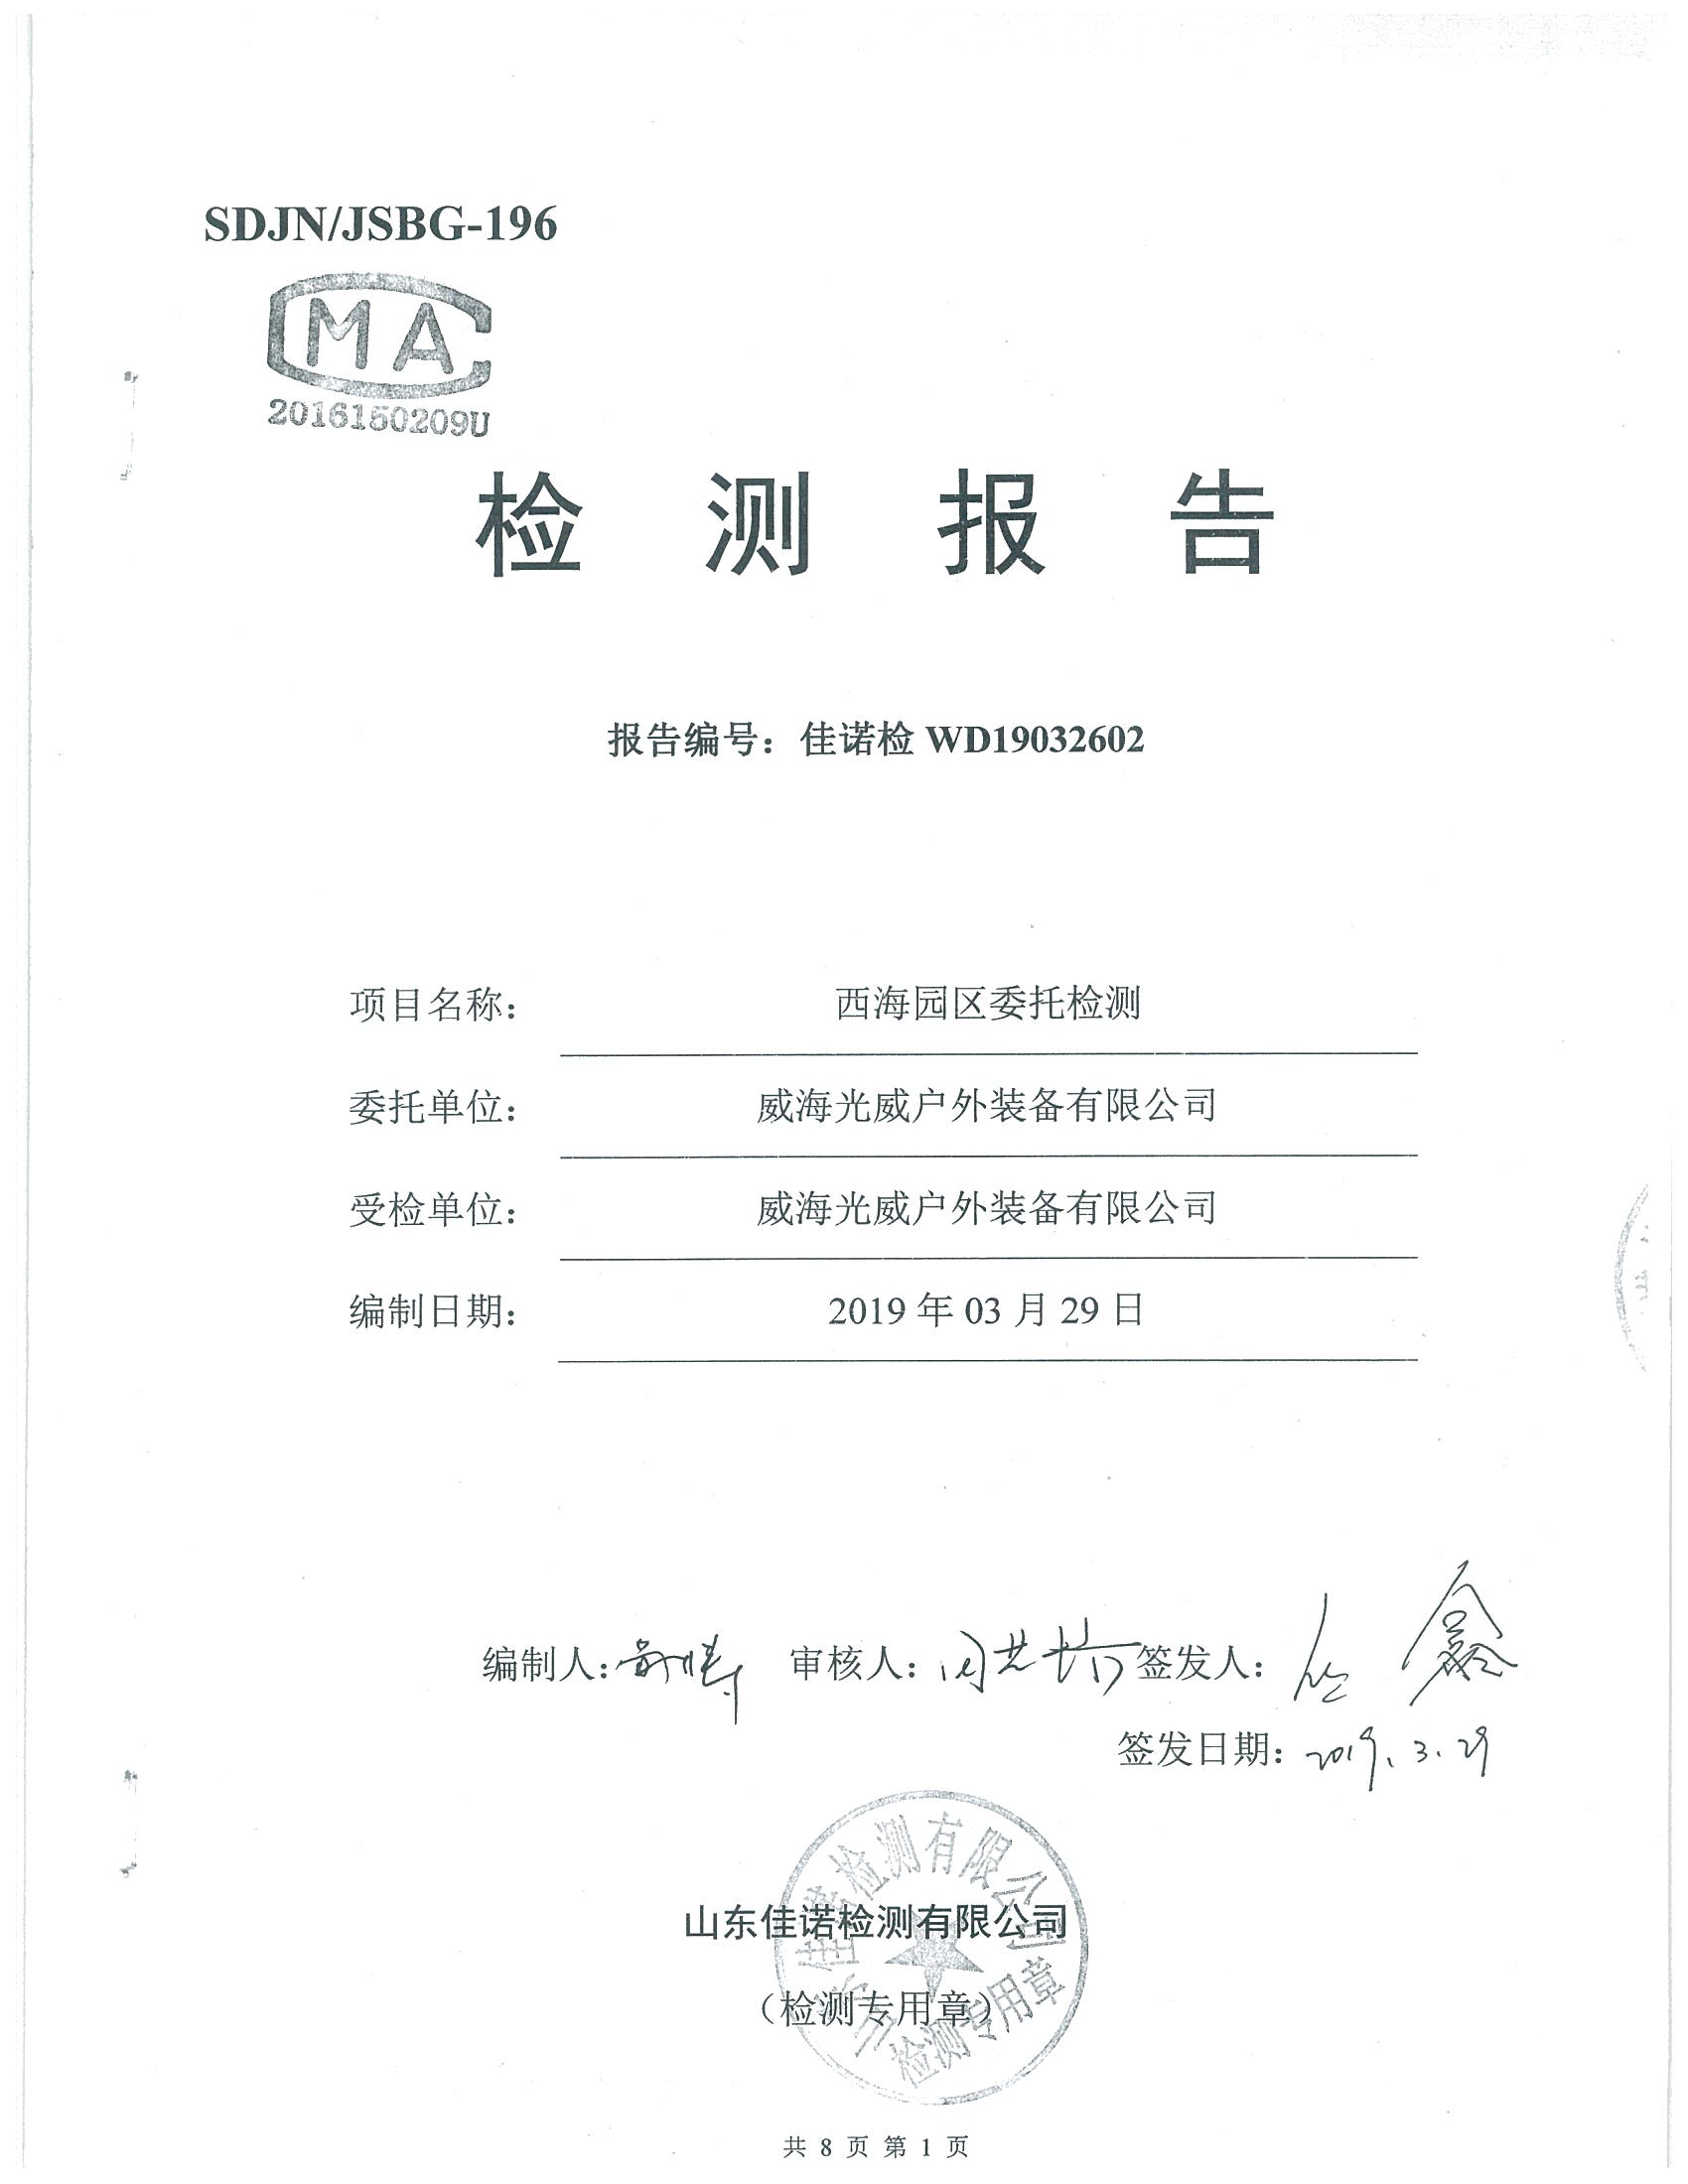 Announcement of test report in Xihai Park